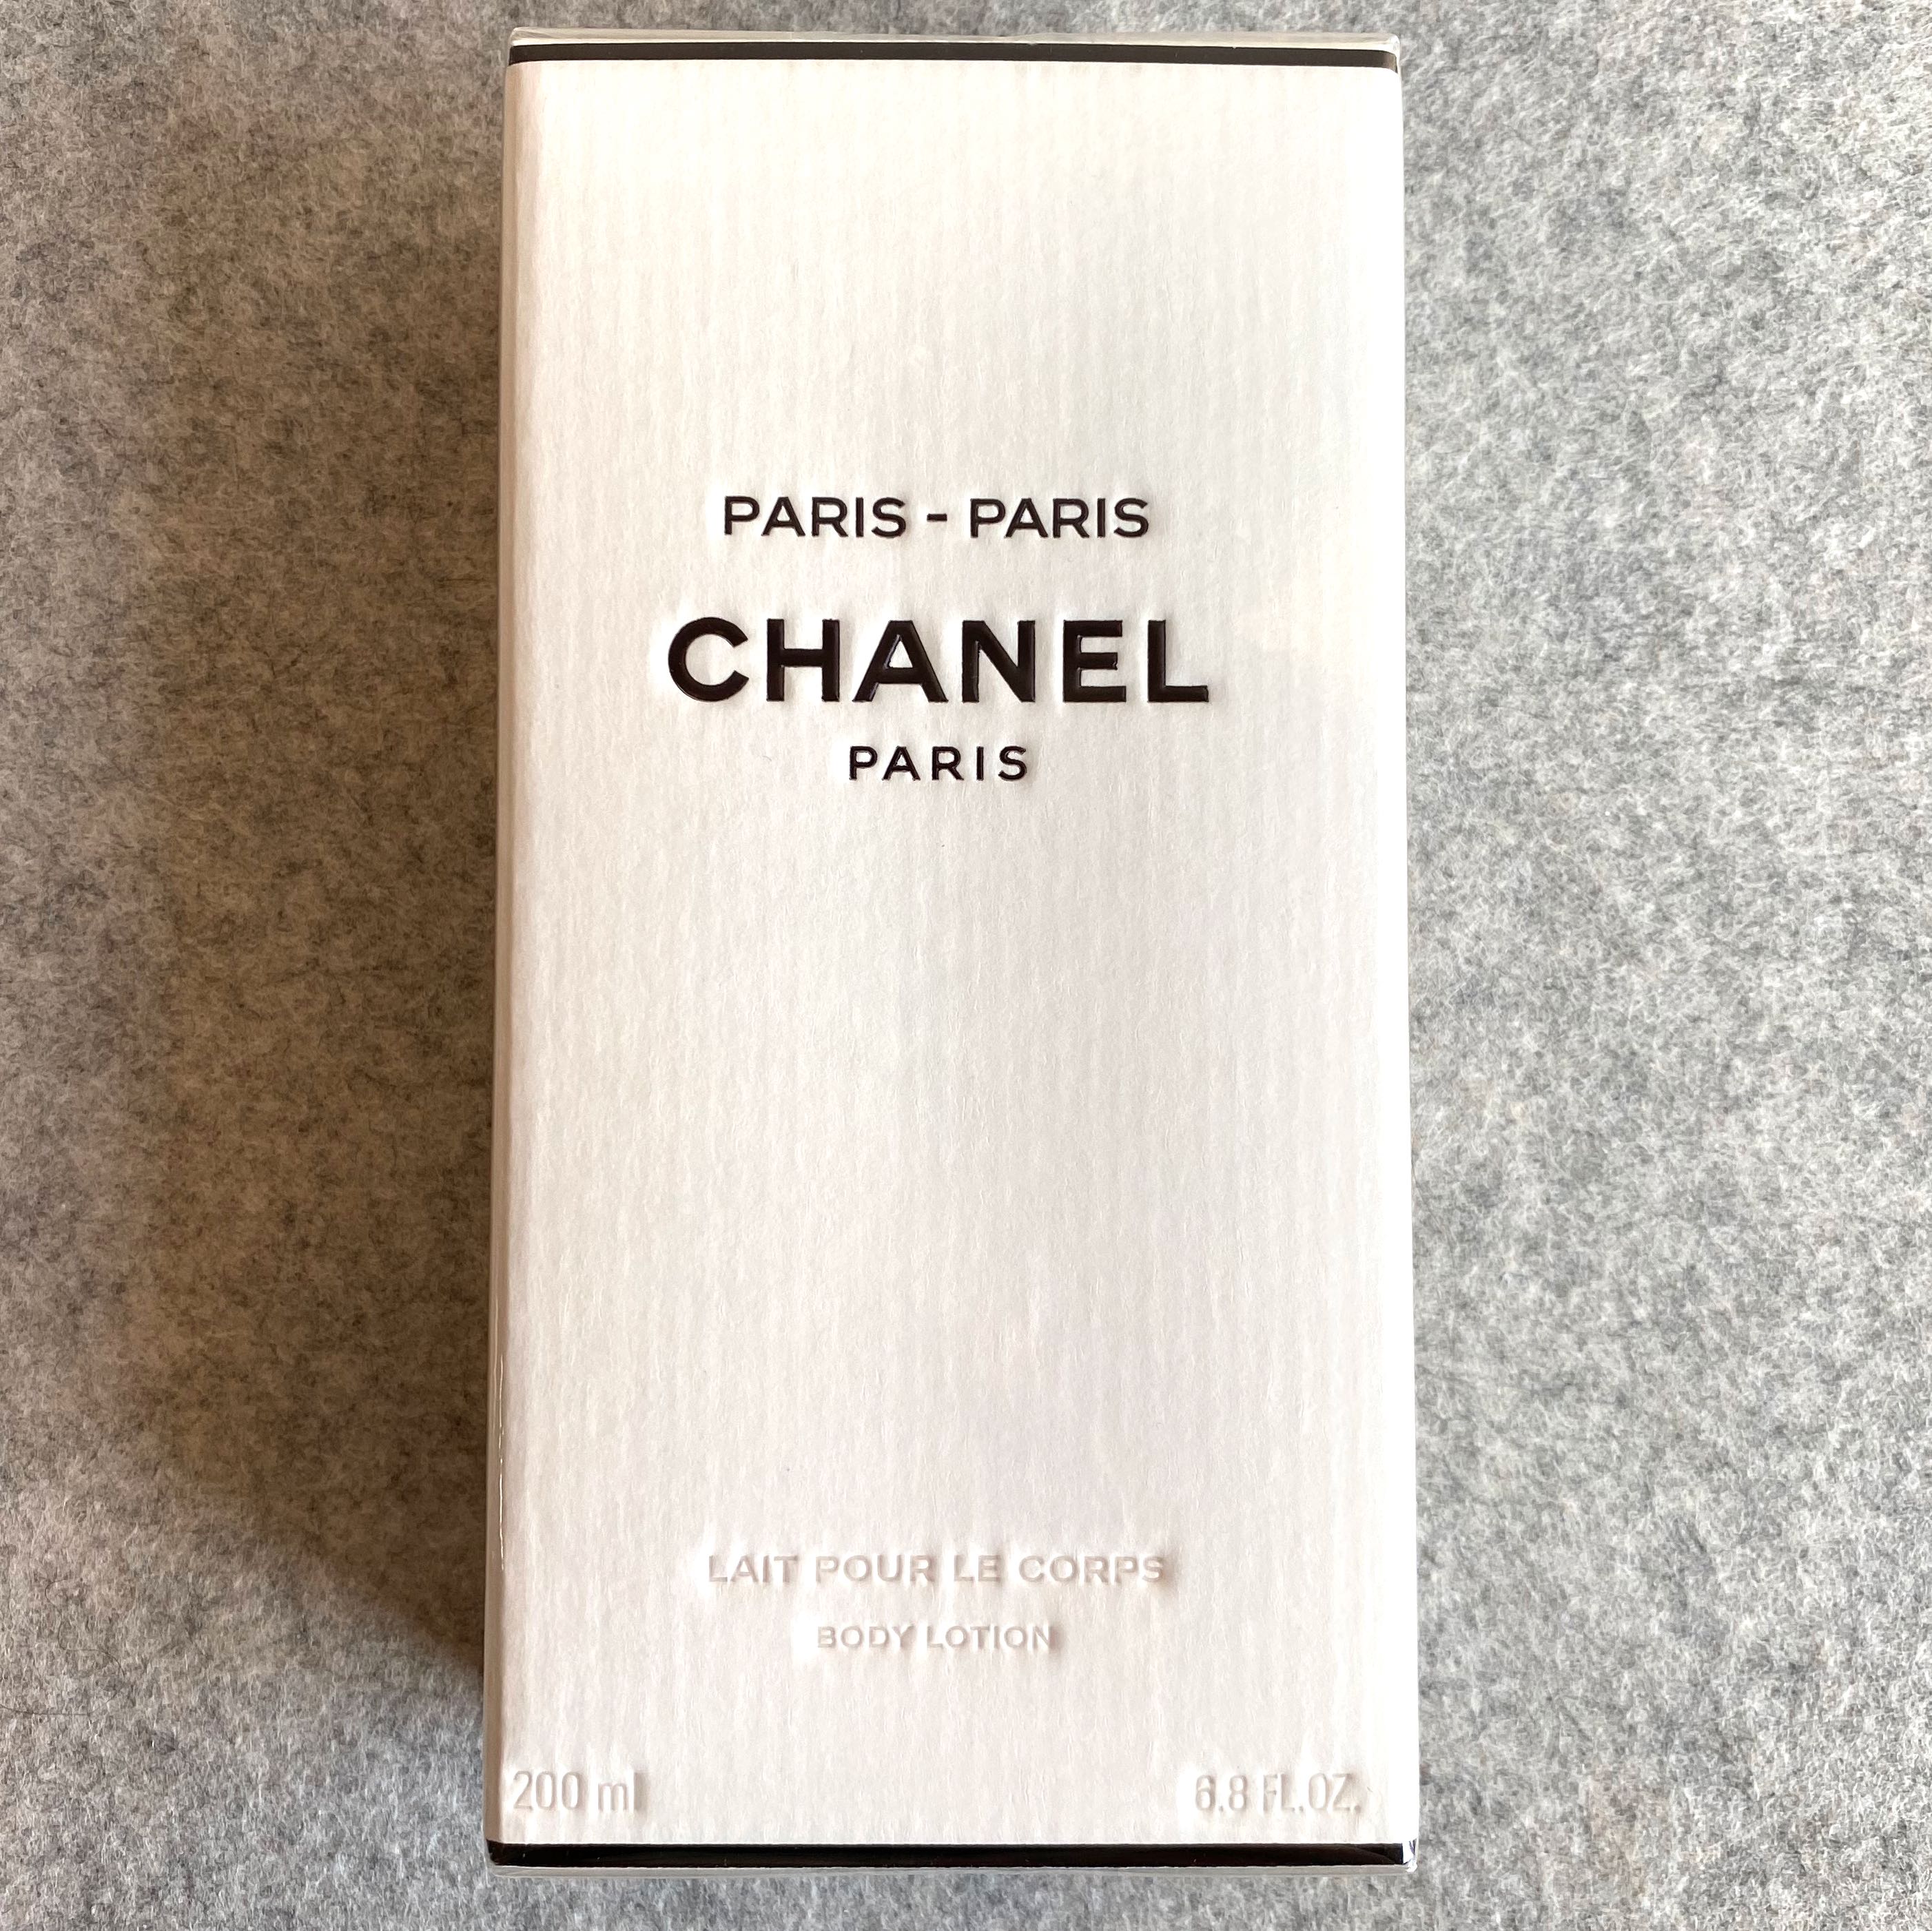 BNIB Chanel Paris – Paris Body Lotion / Chanel Body Lotion, Beauty &  Personal Care, Bath & Body, Body Care on Carousell